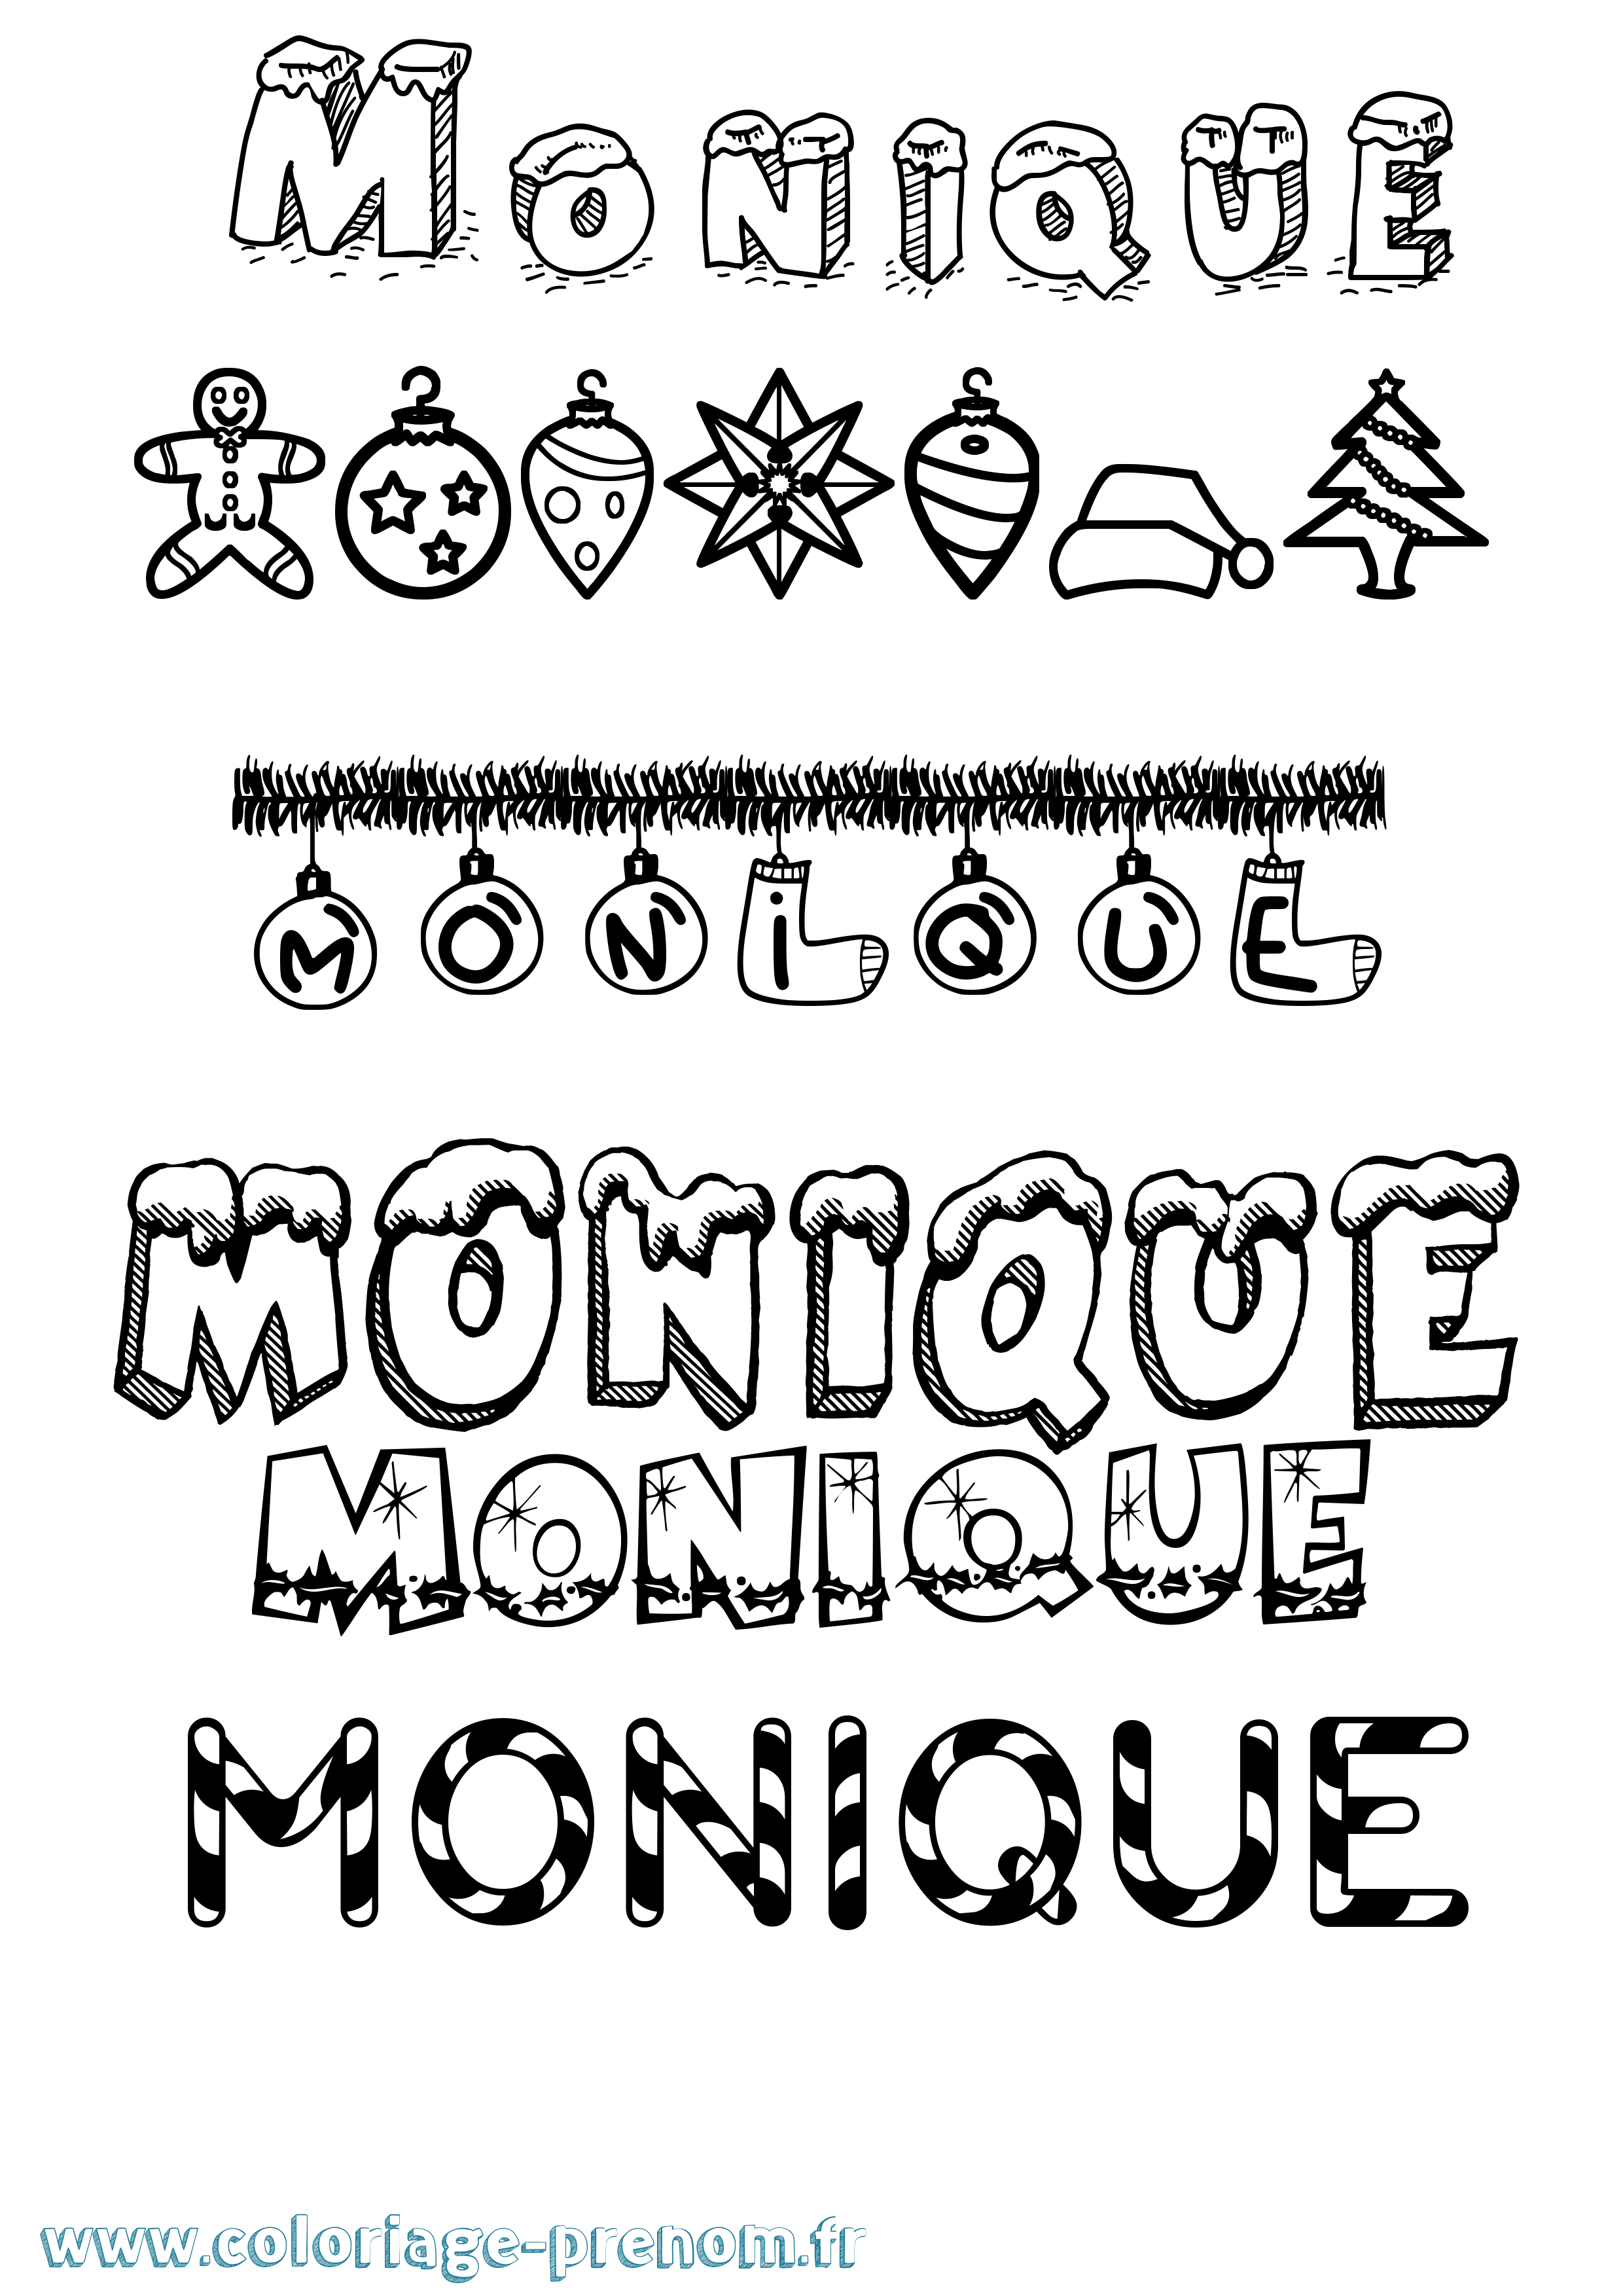 Coloriage prénom Monique